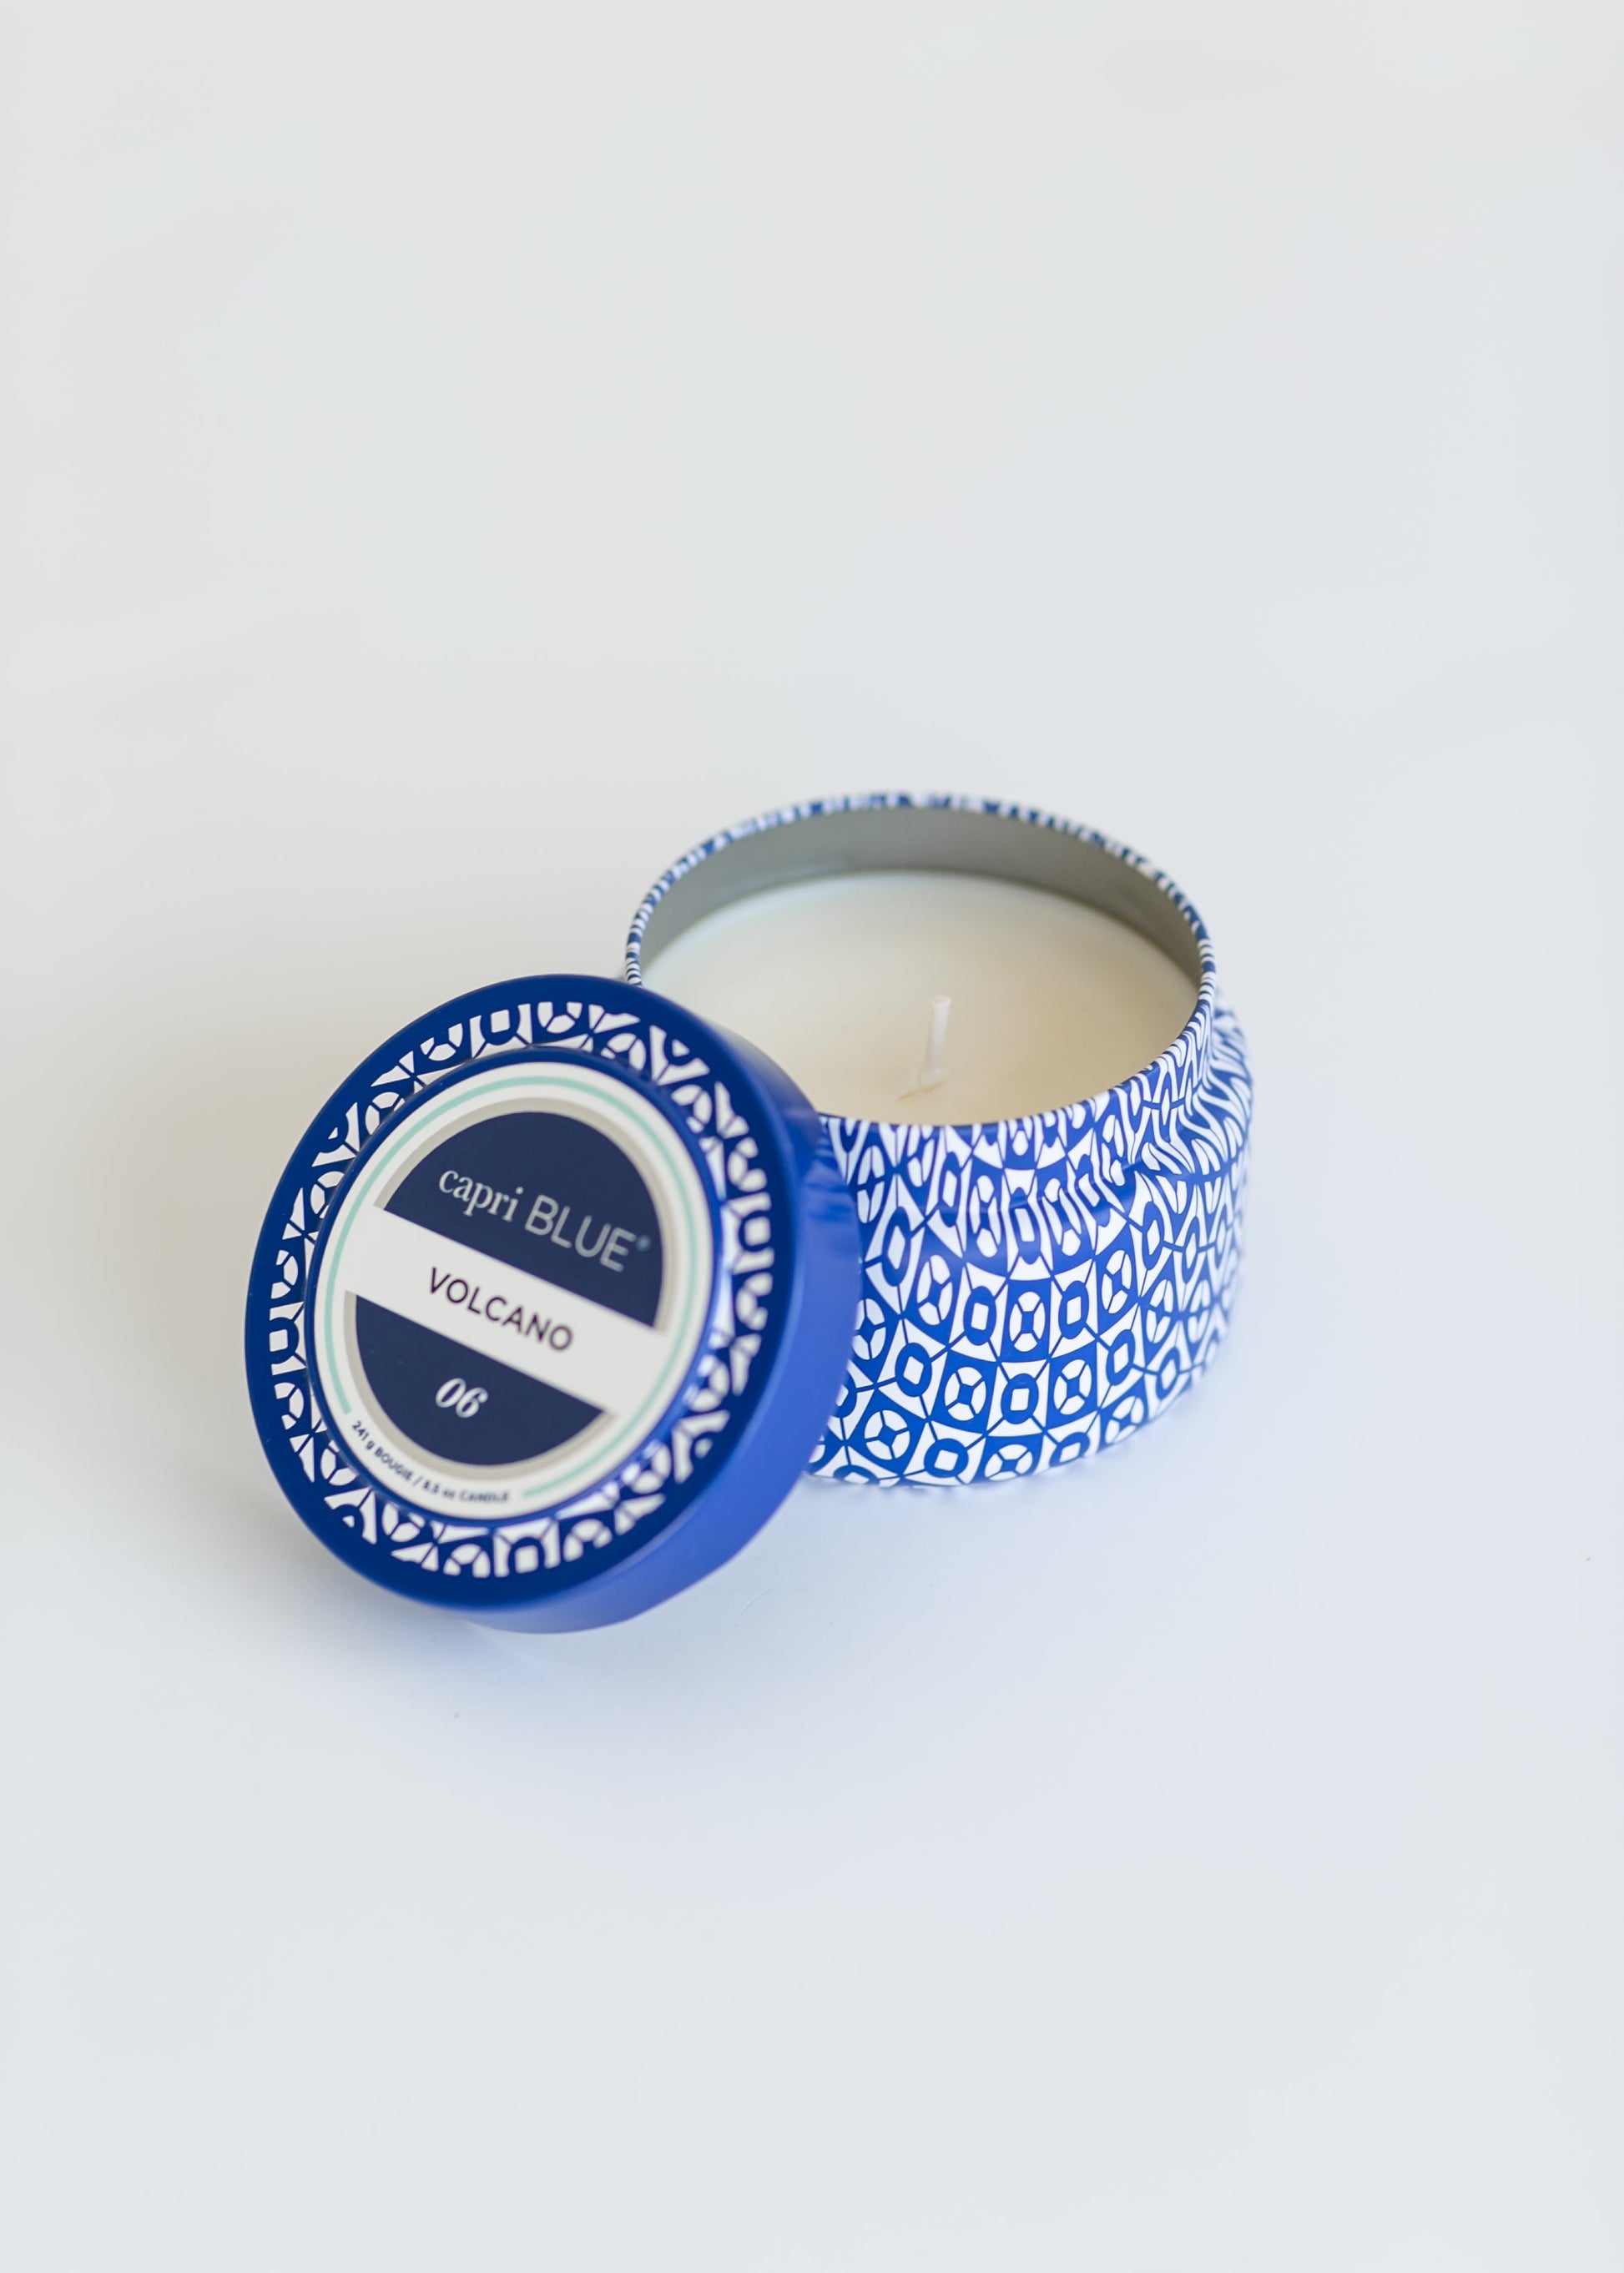 Capri Blue® Volcano Signature Printed Travel Tin Candle Gifts